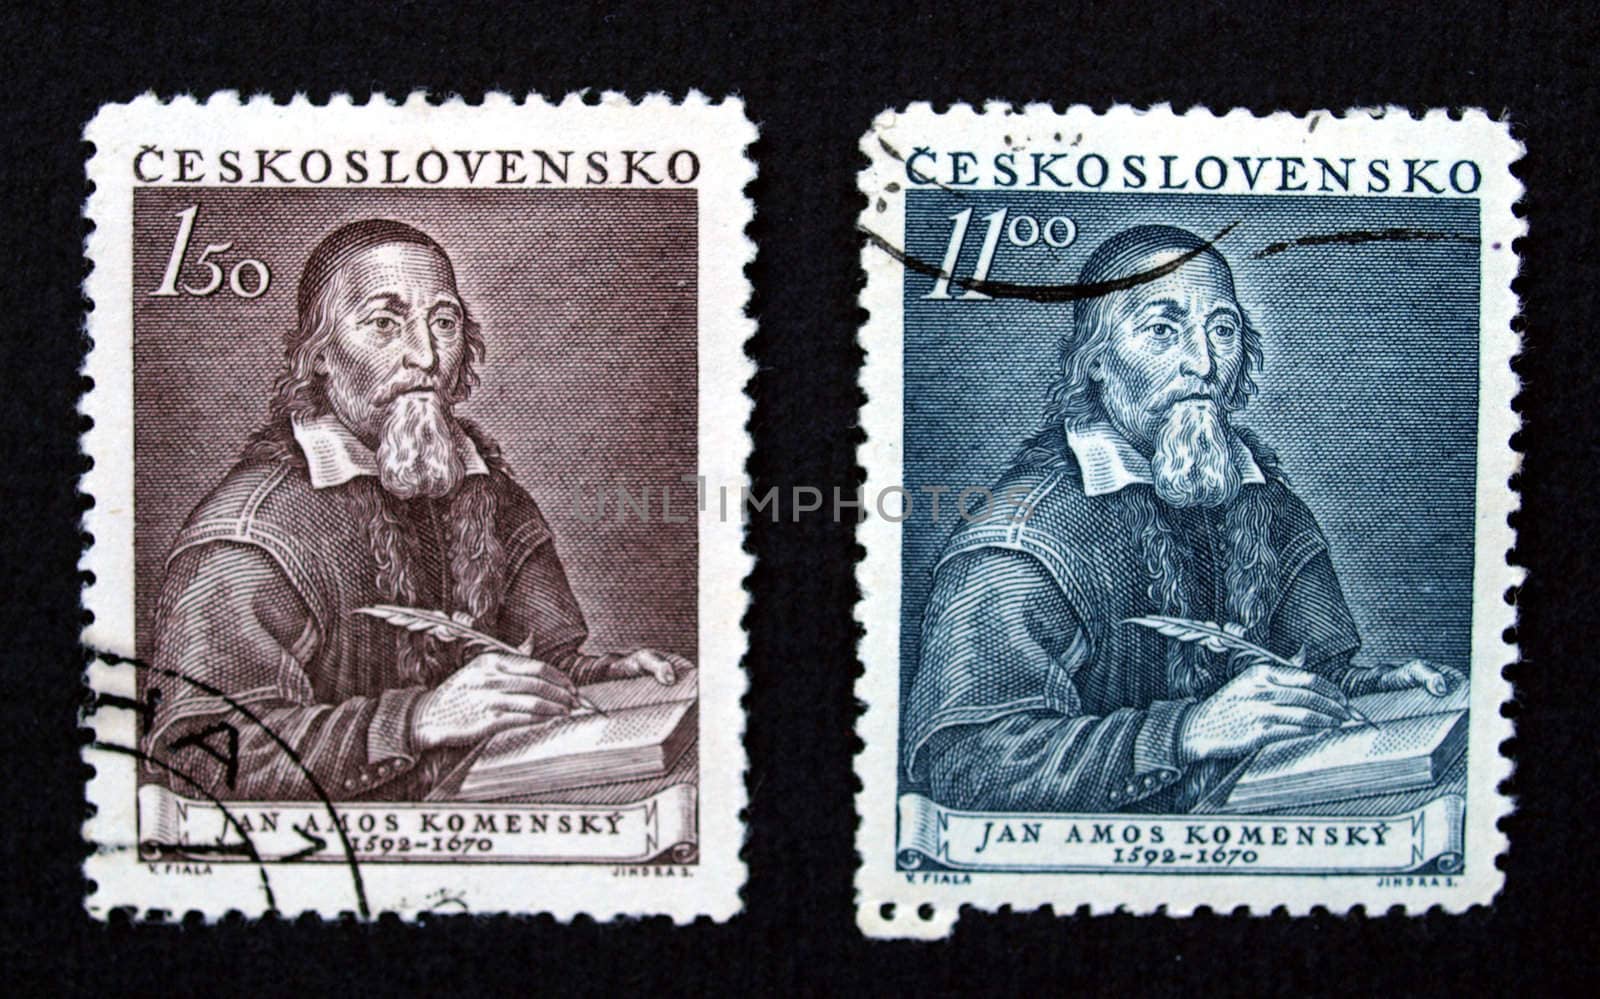 Stamp of the Czech Republic (European Union) with Jan Amos Komensky